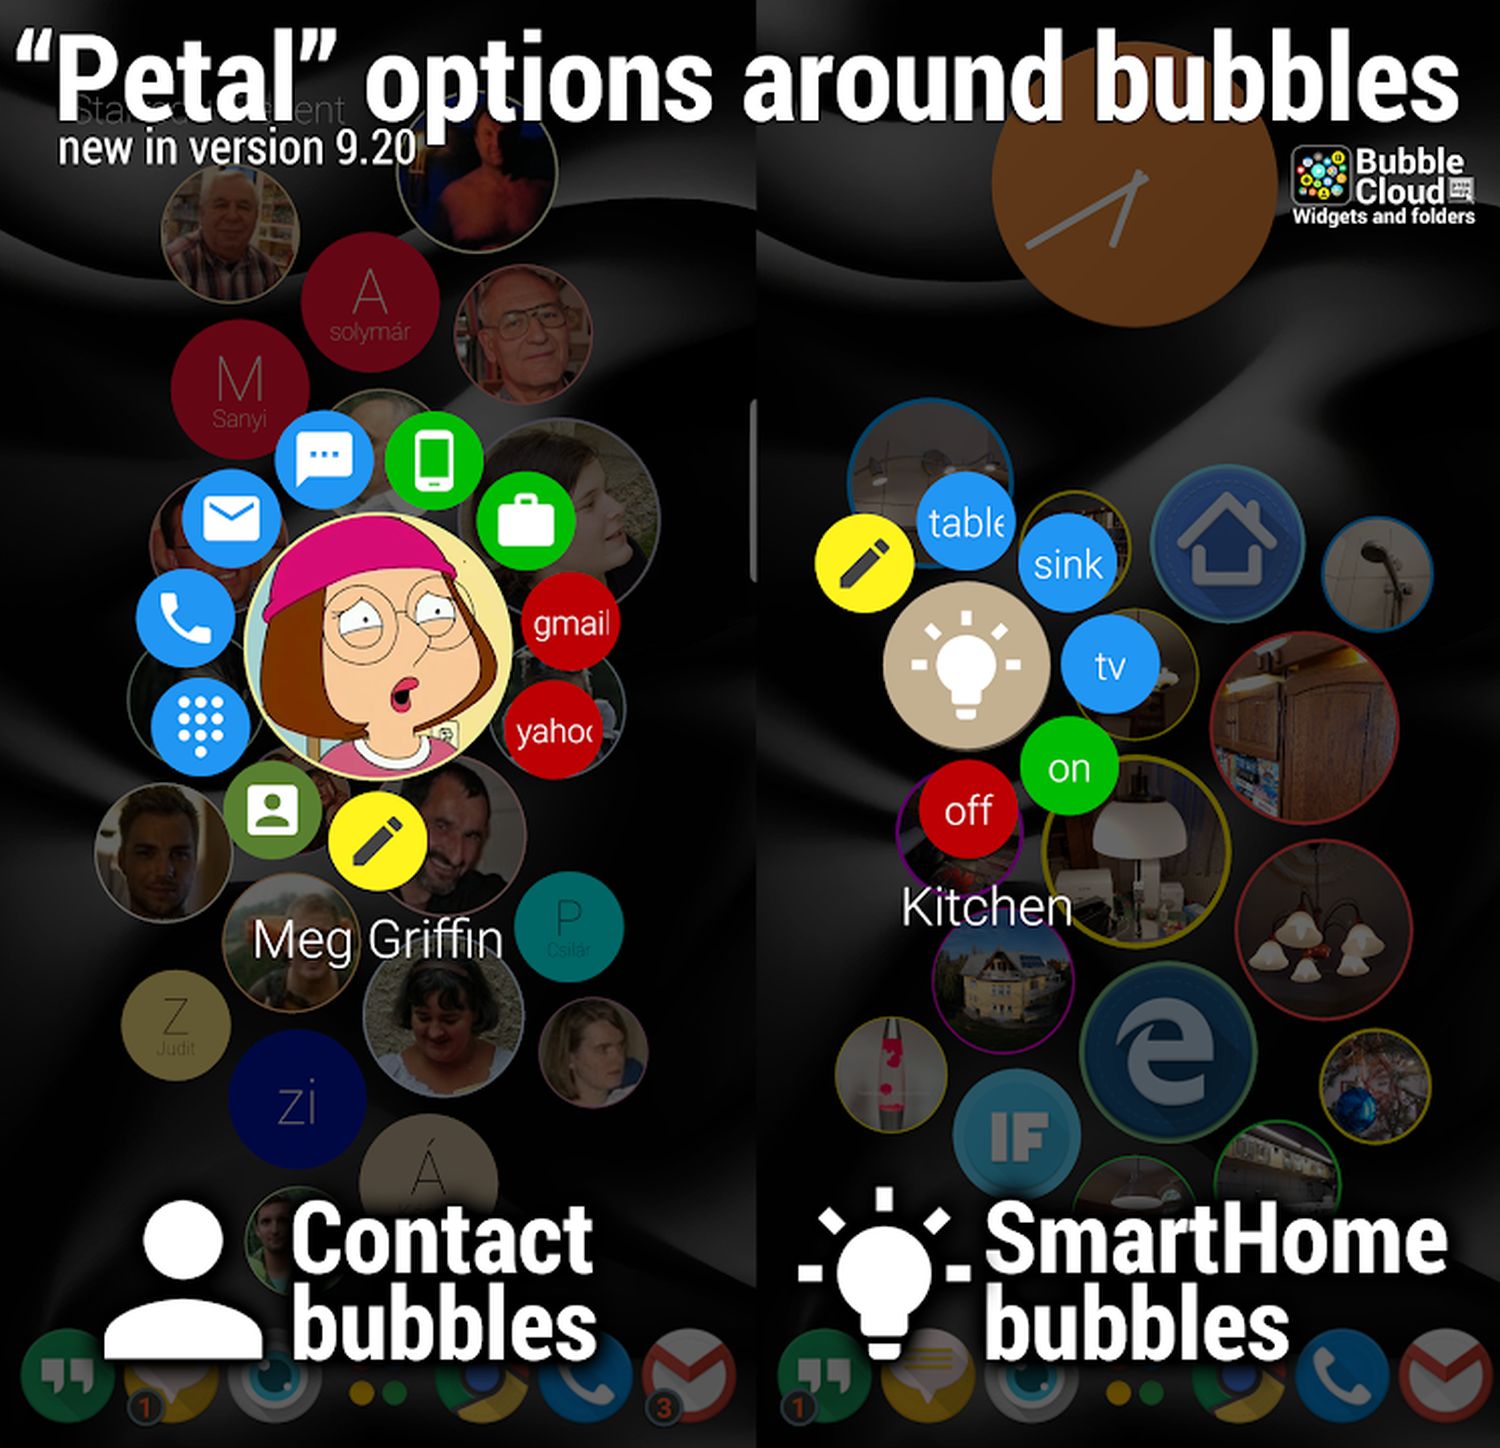 bubble cloud widget screenshot 3